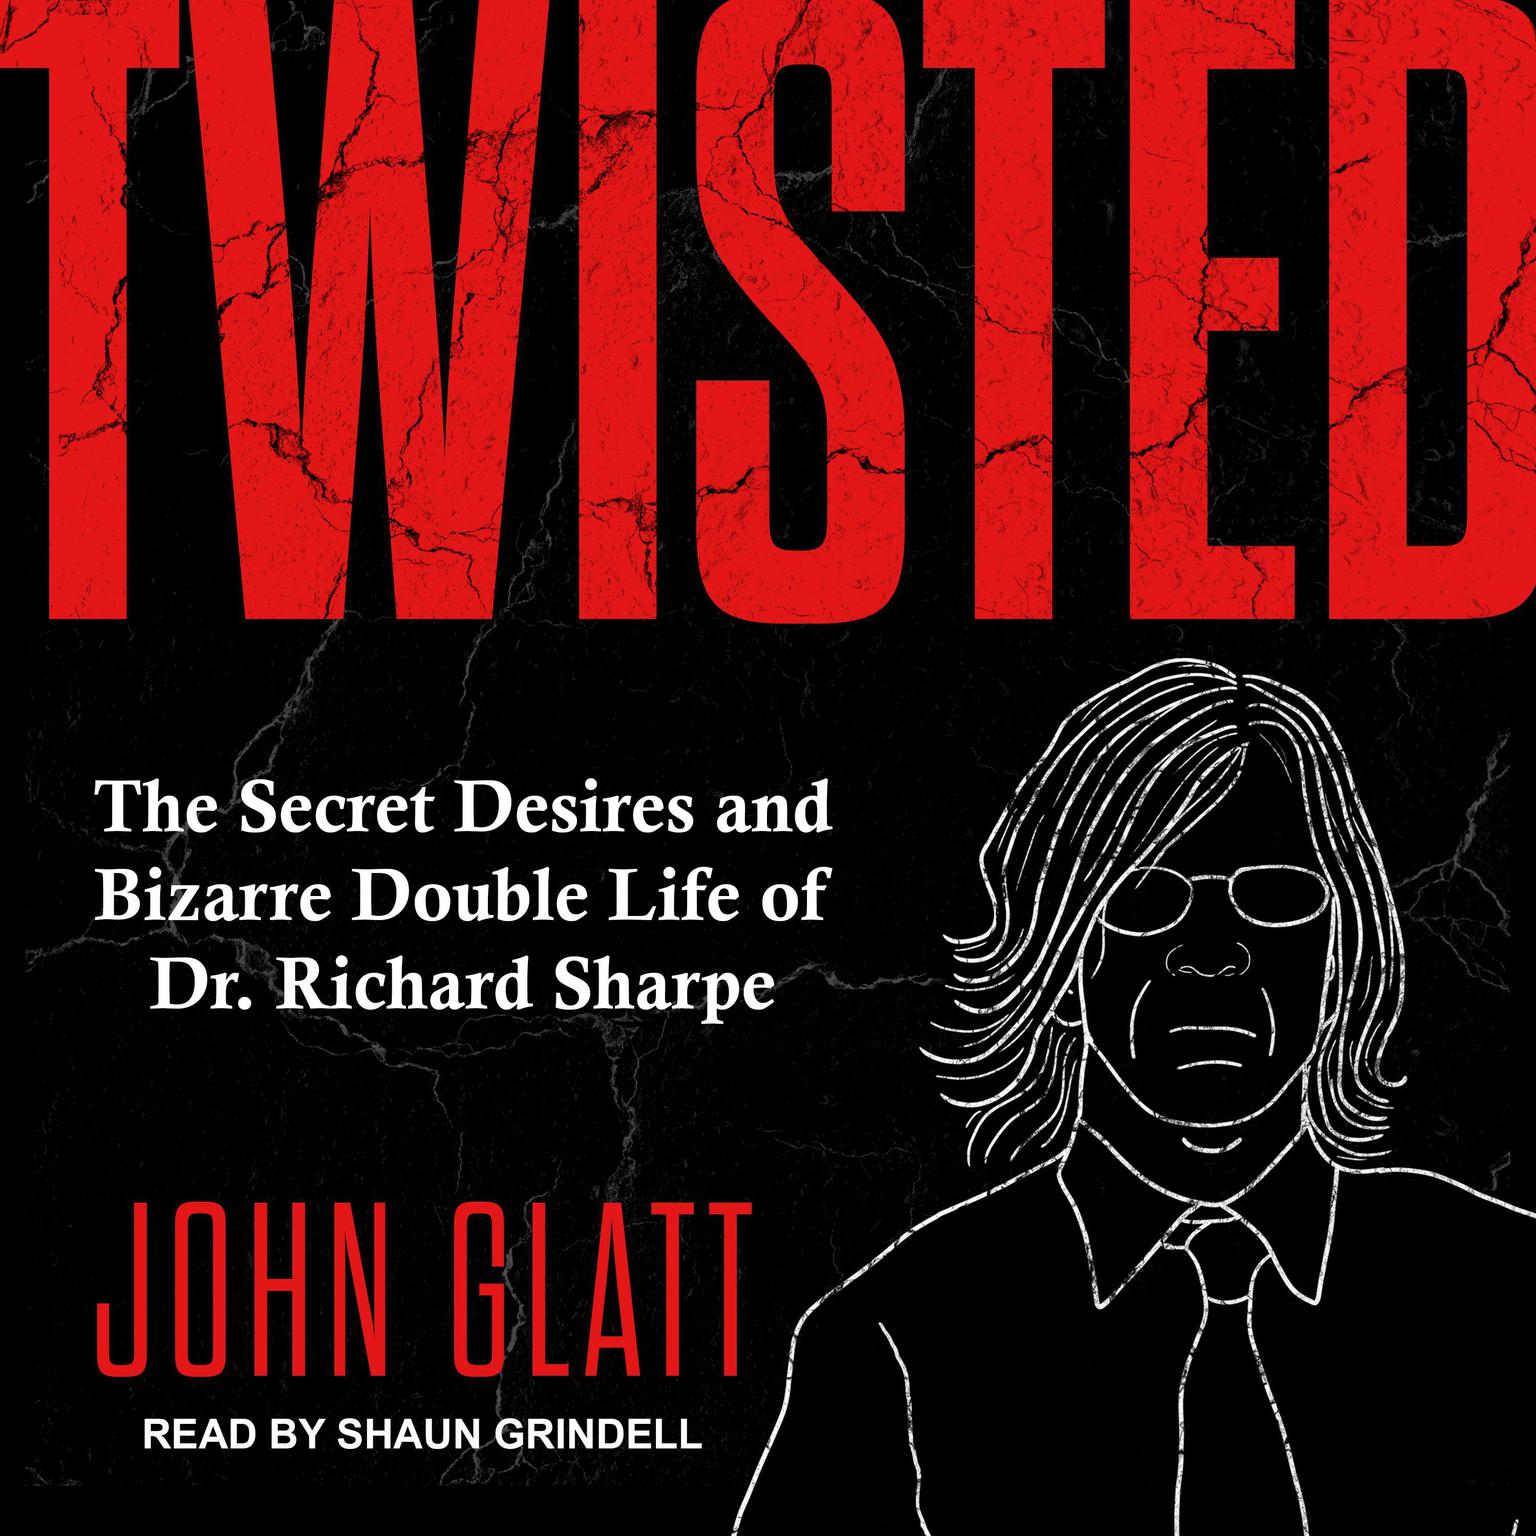 Twisted: The Secret Desires and Bizarre Double Life of Dr. Richard Sharpe Audiobook, by John Glatt